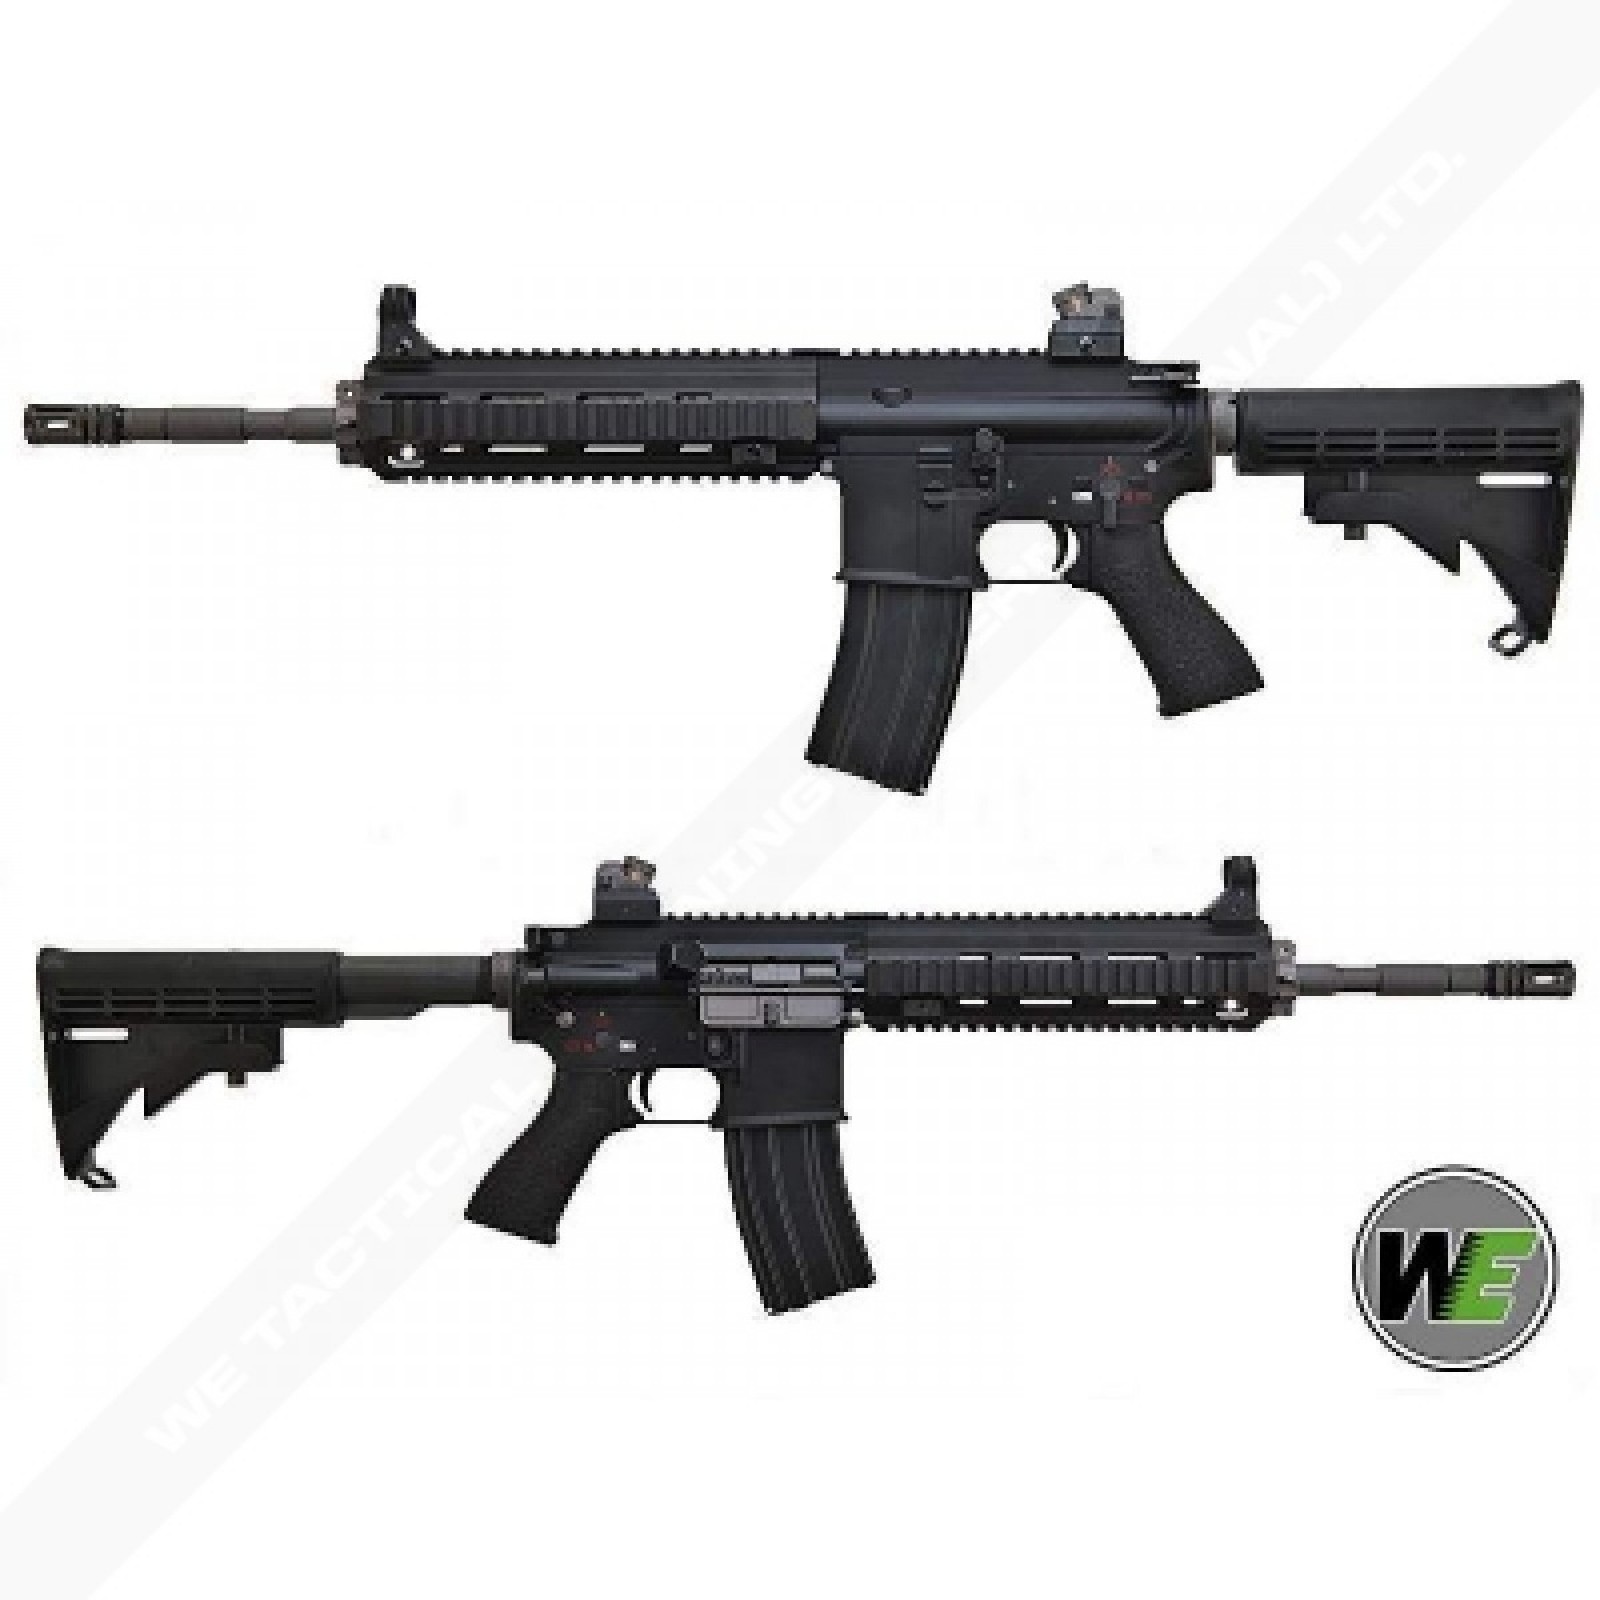 WE 888 GBBR Black - 888 Series - WE Rifles (GBBR) - Guns